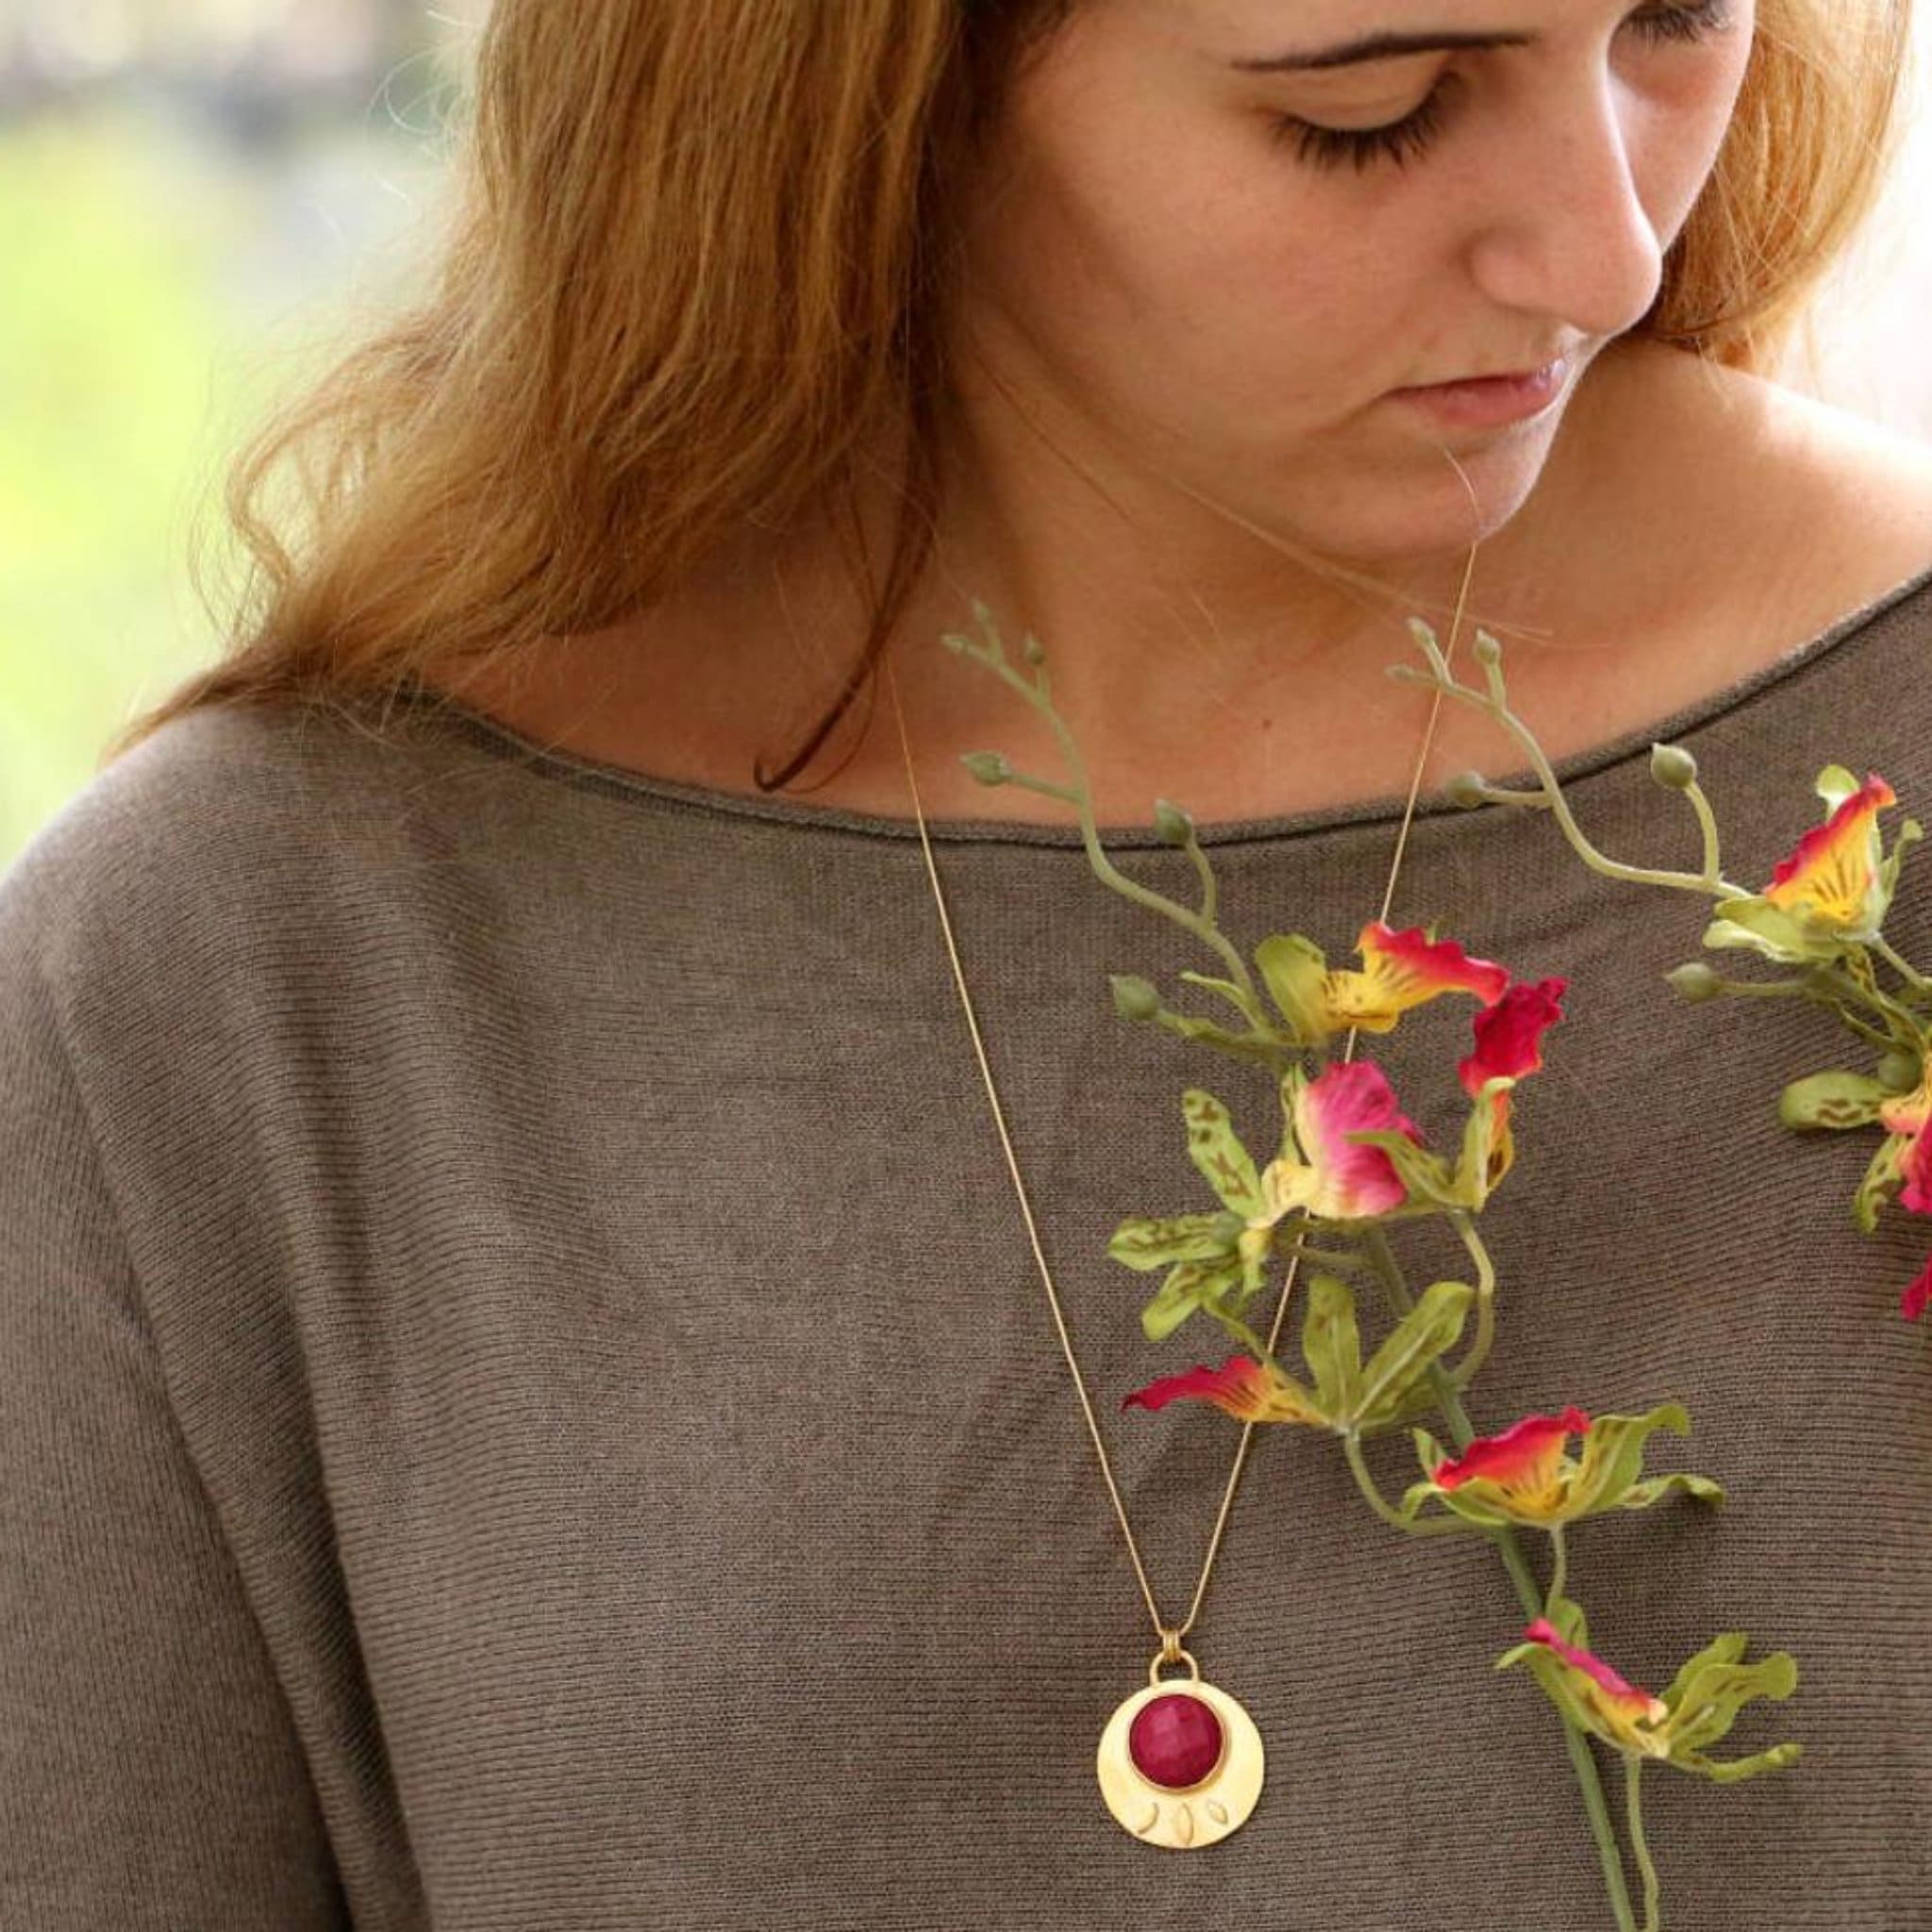 Artisan Vintage Gold Pendant Ruby Necklace Necklaces